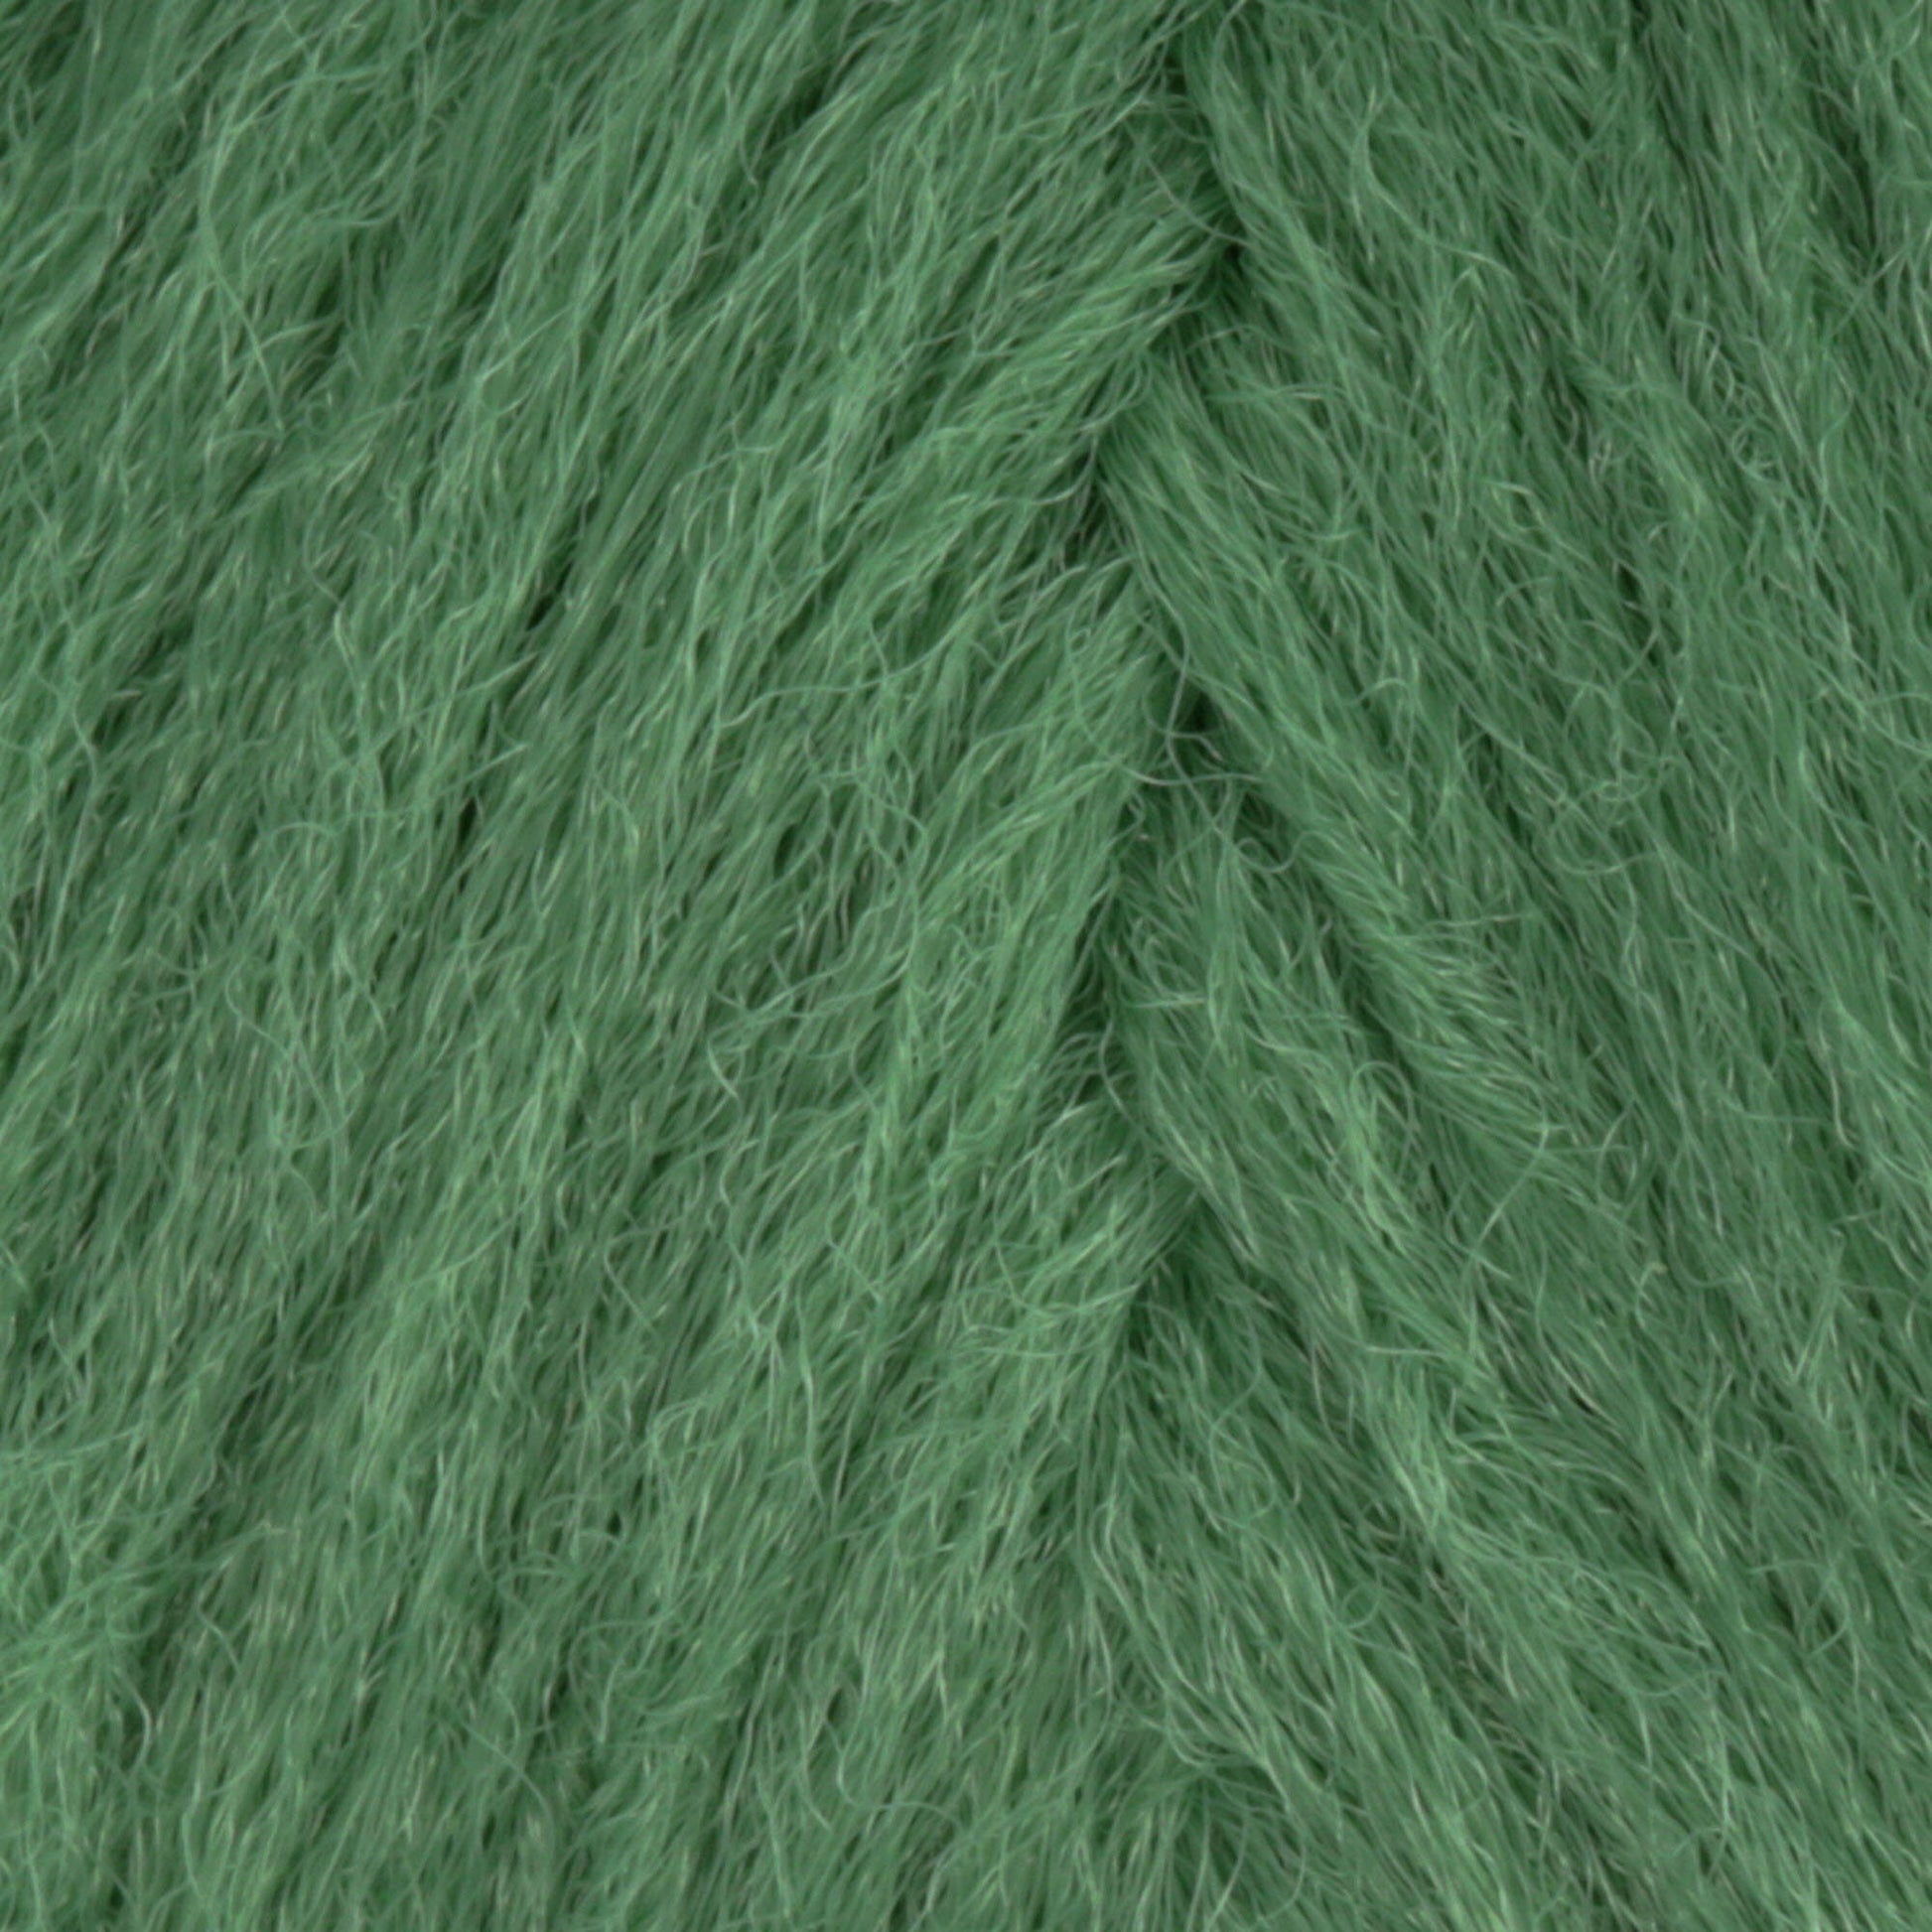 Phentex Slipper & Craft Yarn - Discontinued Shades Lush